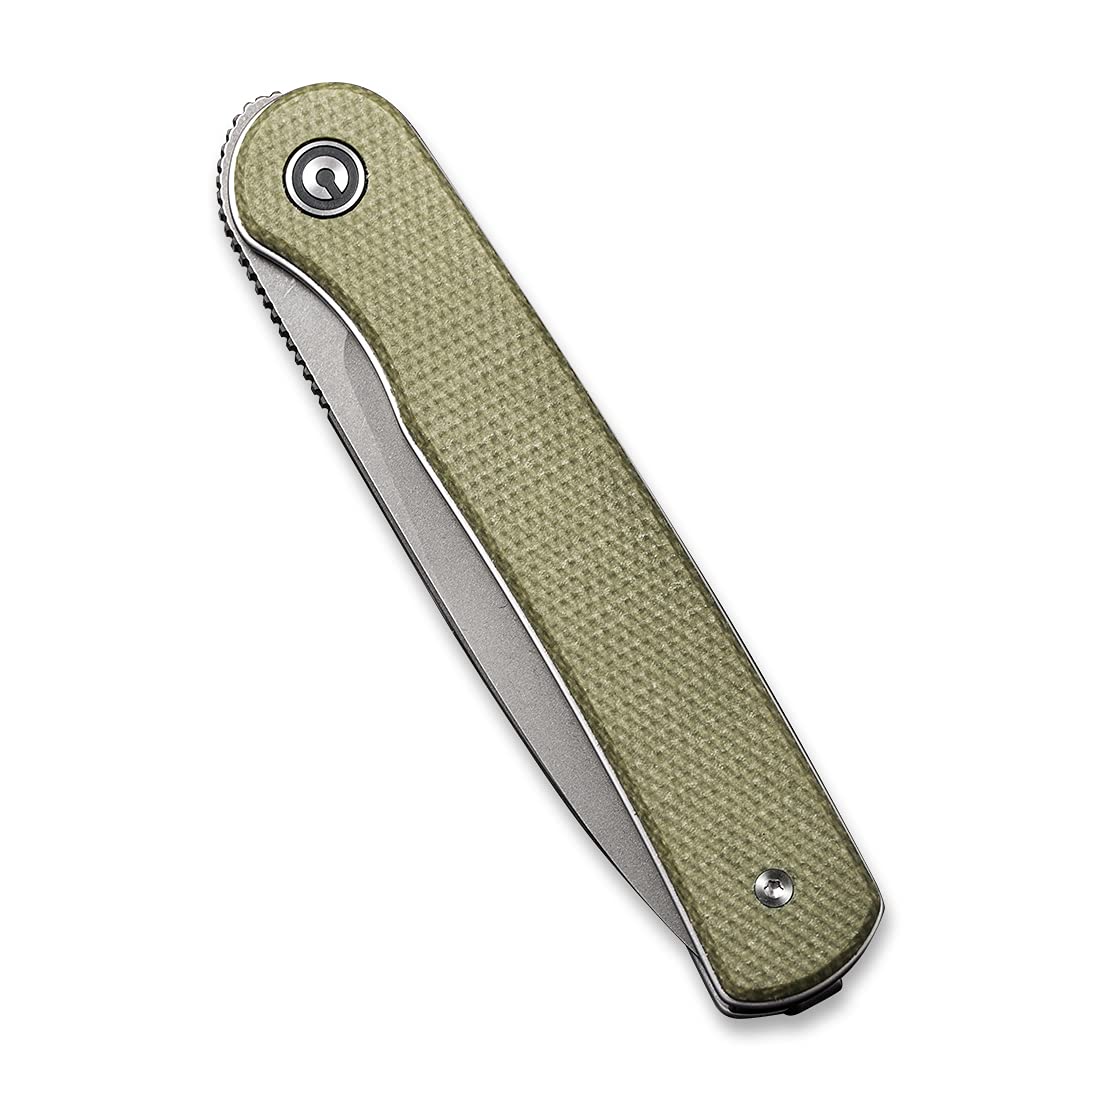 CIVIVI Stylum Pocket Knife, Double Detent Slip Joint Folding Knife with a Front Flipper Opener, 2.96" 10Cr15CoMoV Blade Micarta Handle C20010B-B (Olive)